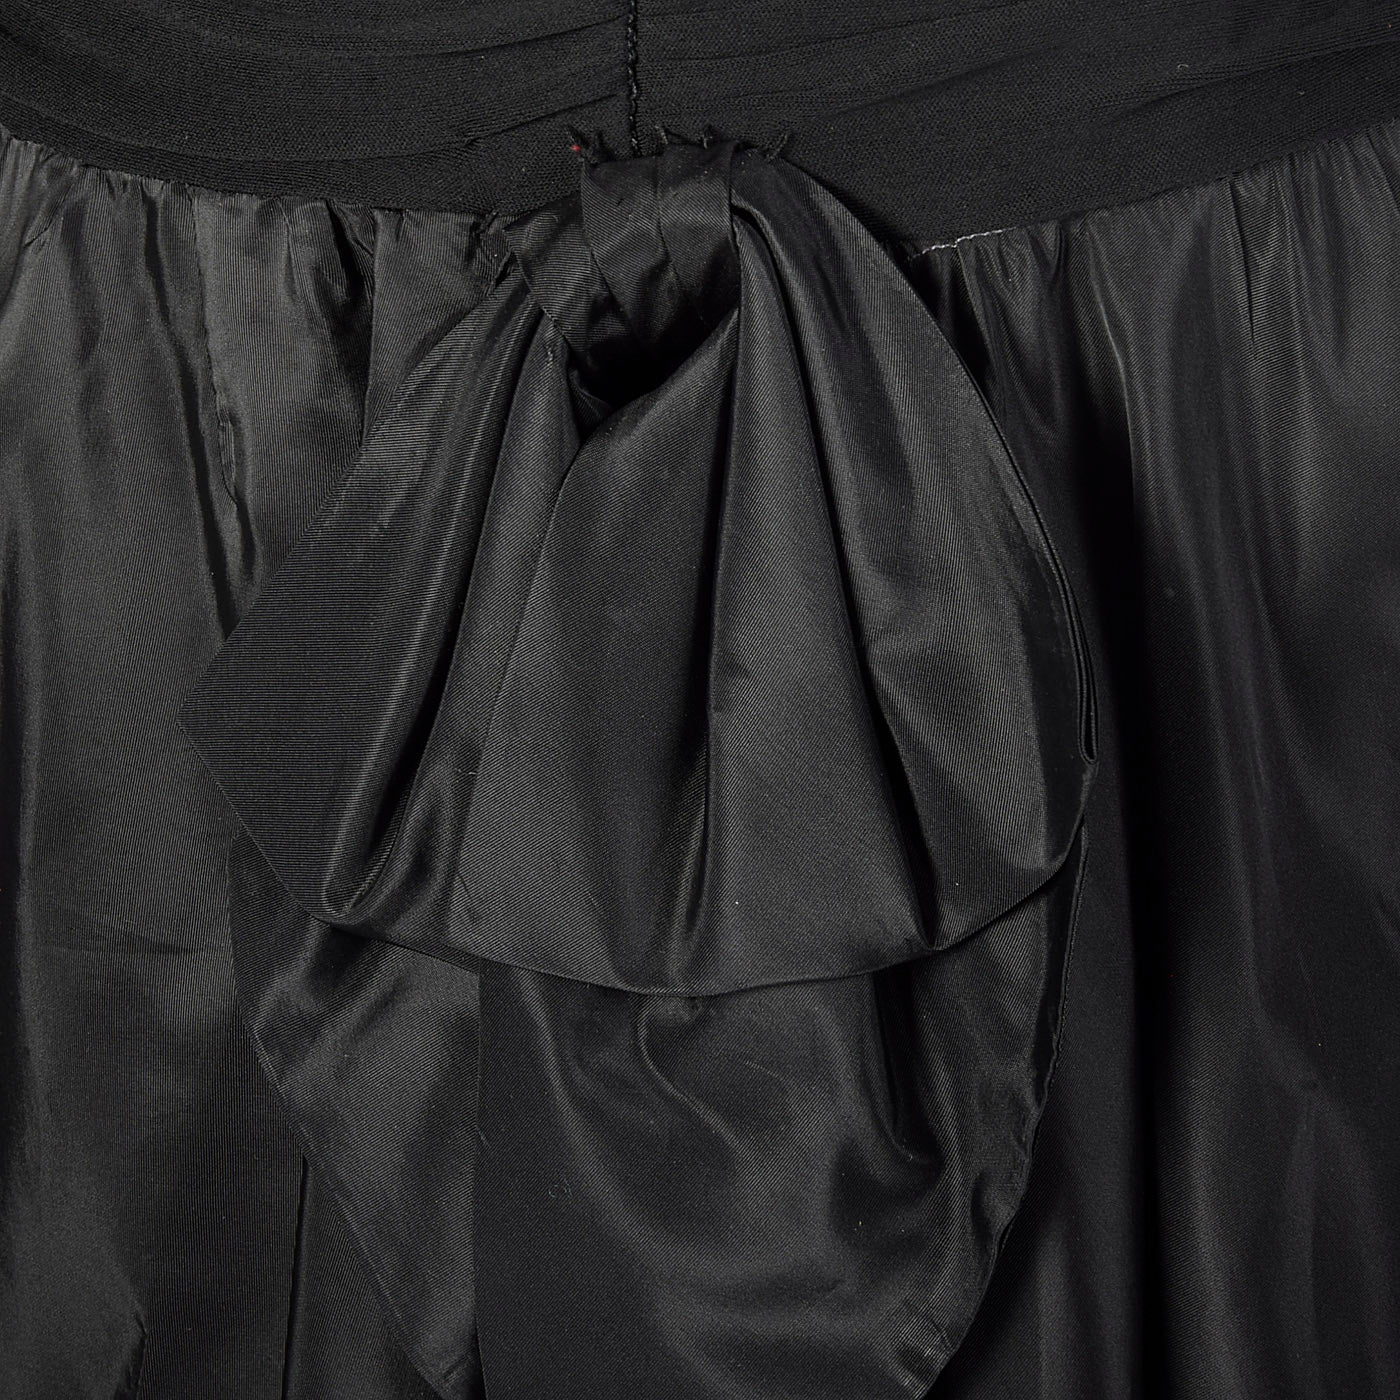 1940s Black Taffeta Dress